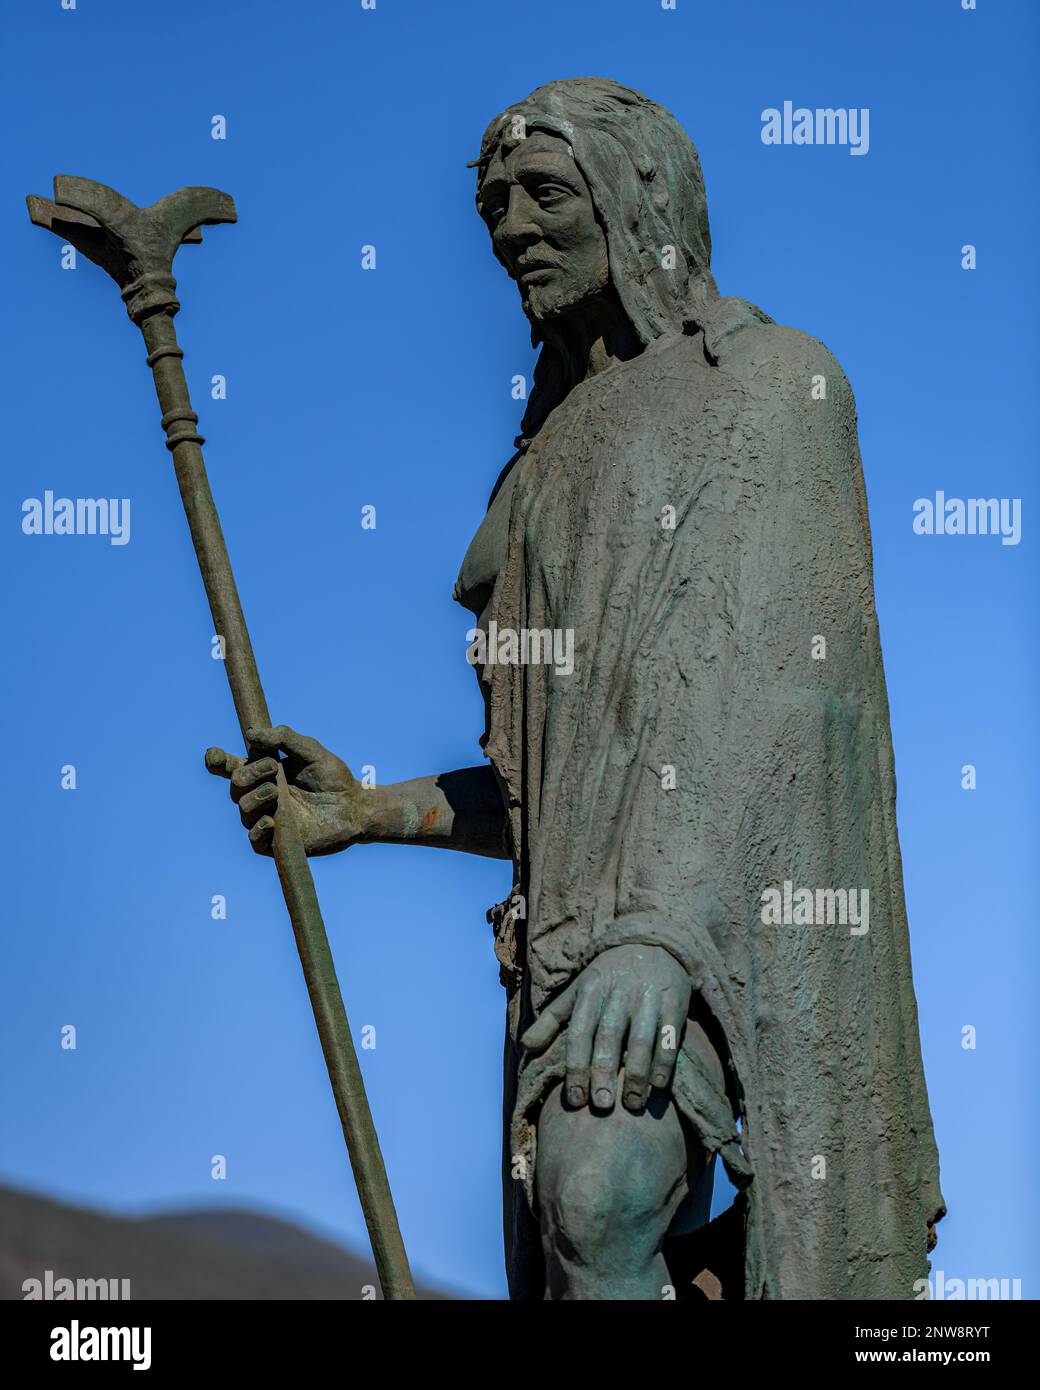 José Abads 1993 Bronzestatue von Tegueste, ein Guanche-König von Menceyato de Tegueste, auf der Plaza de la Patrona de Canarias, Candelaria, Teneriffa Stockfoto